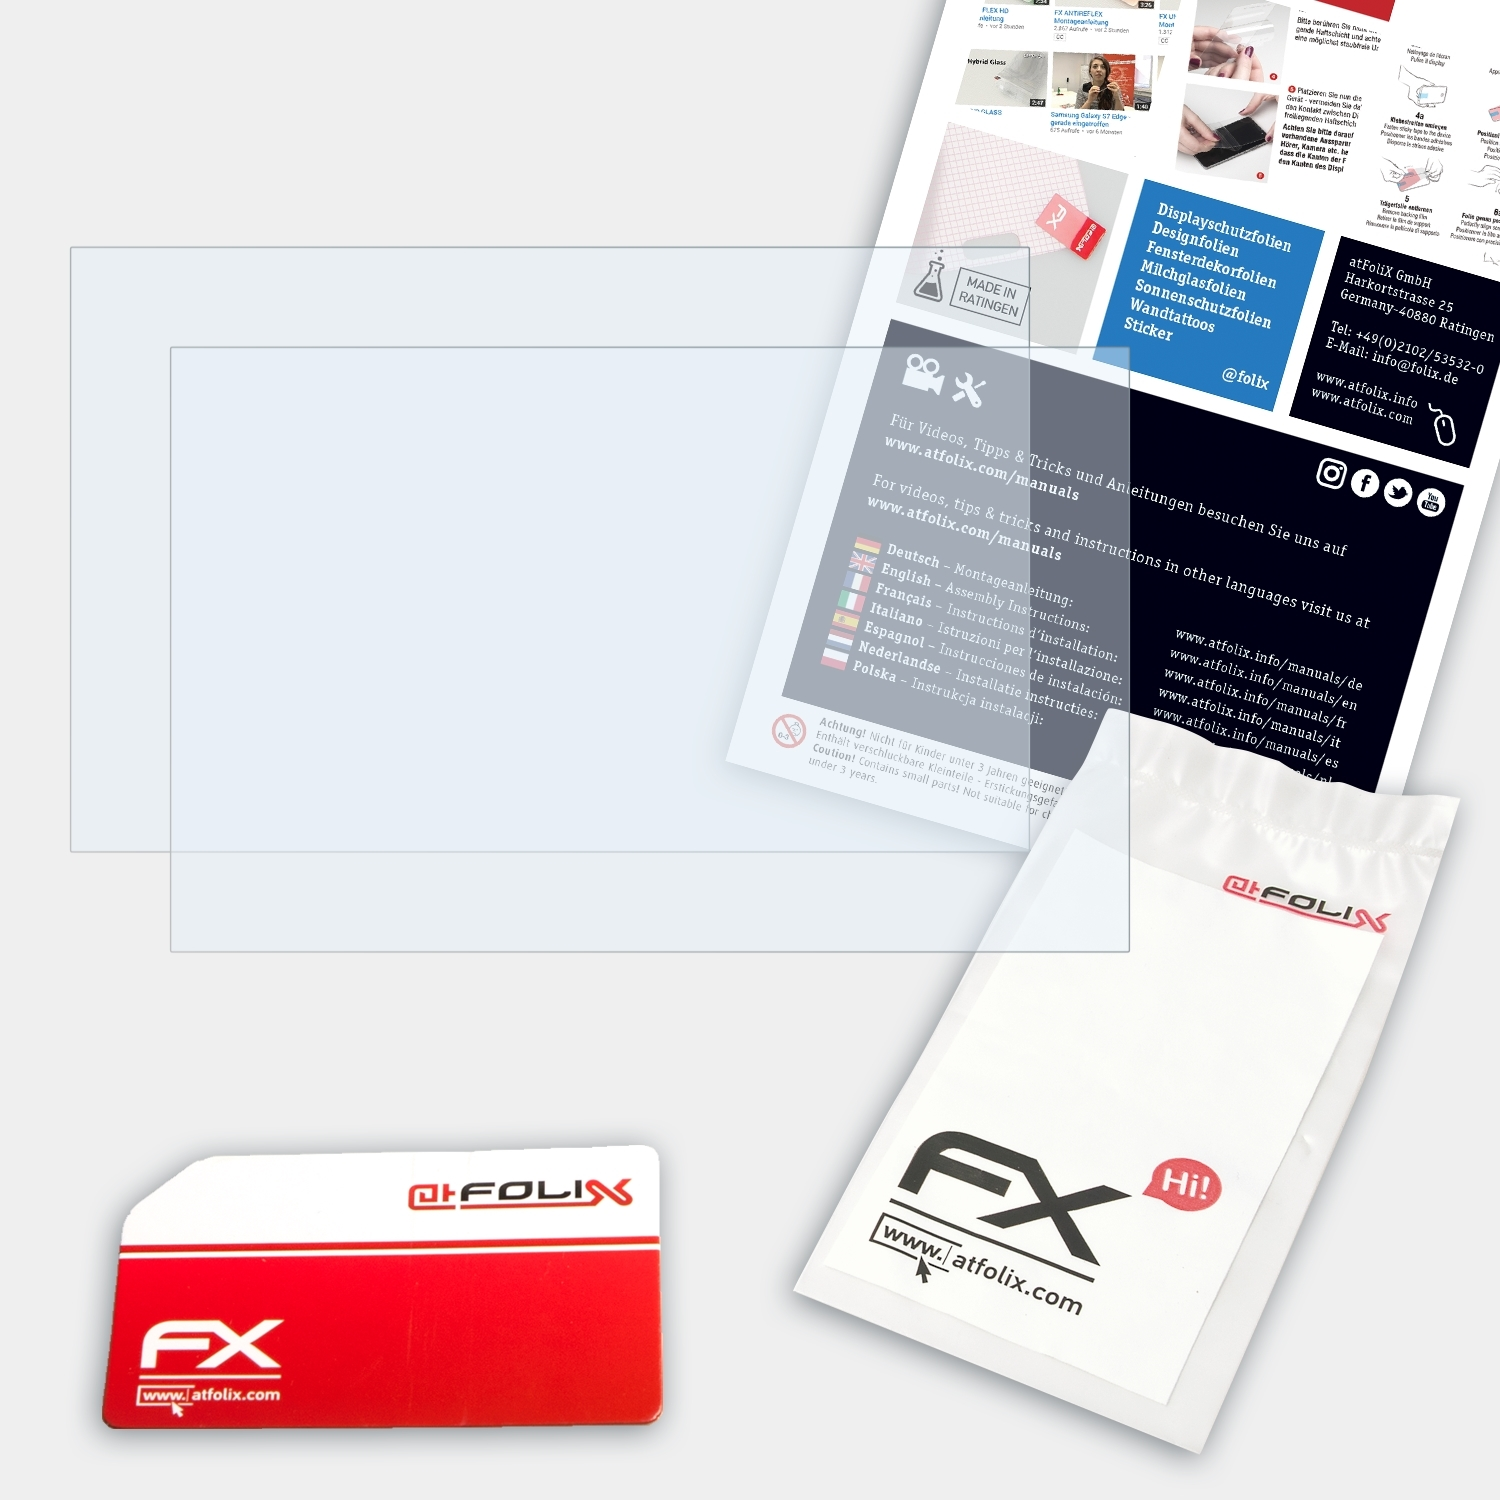 FX-Clear T900) ATFOLIX Lifebook Displayschutz(für 2x Fujitsu